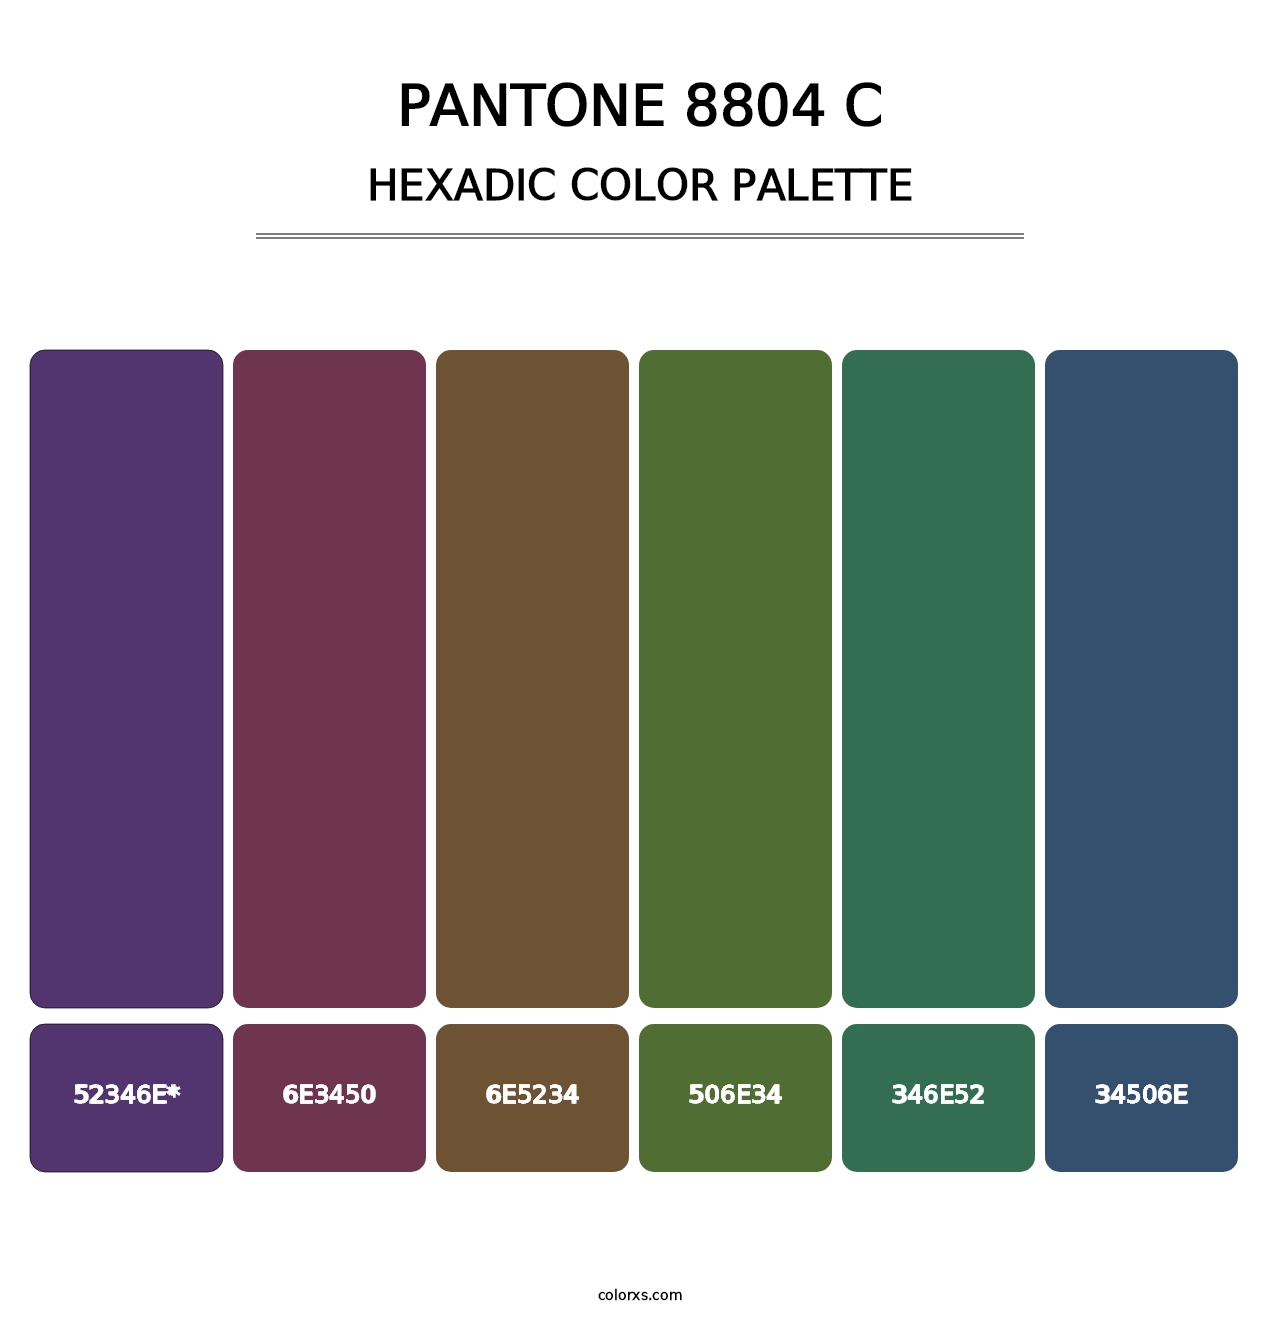 PANTONE 8804 C - Hexadic Color Palette